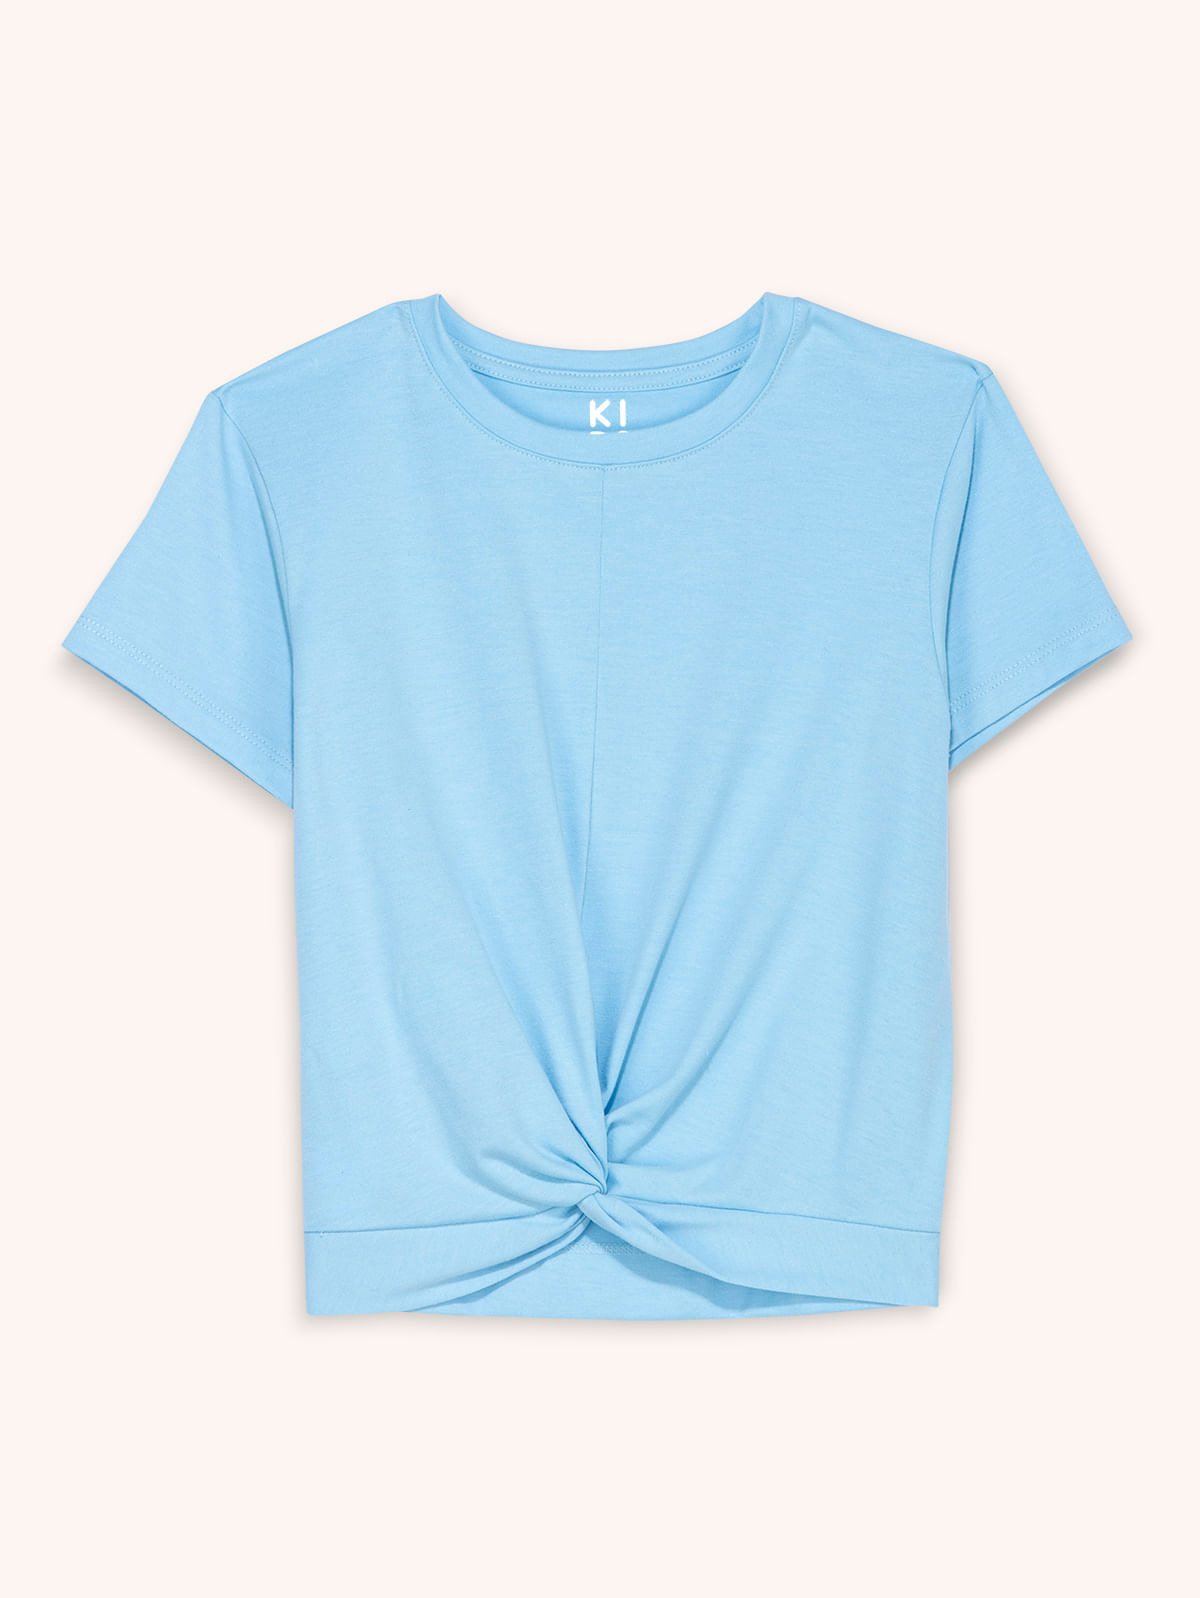 𝘾𝙖𝙢𝙞𝙨𝙚𝙩𝙖𝙨 𝘼𝙯𝙪𝙡𝙚𝙨? ¡𝘾𝙡𝙖𝙧𝙤 𝙦𝙪𝙚 𝙨𝙞! Tenemos: Camiseta  Azul Marino, Azul Royal (o Bandera) y Azul Turquesa. ¿Cuál necesitas? Haz  tu pedido⤵️⤵️ 📲 Whatsapp, By Mr. T-Shirt